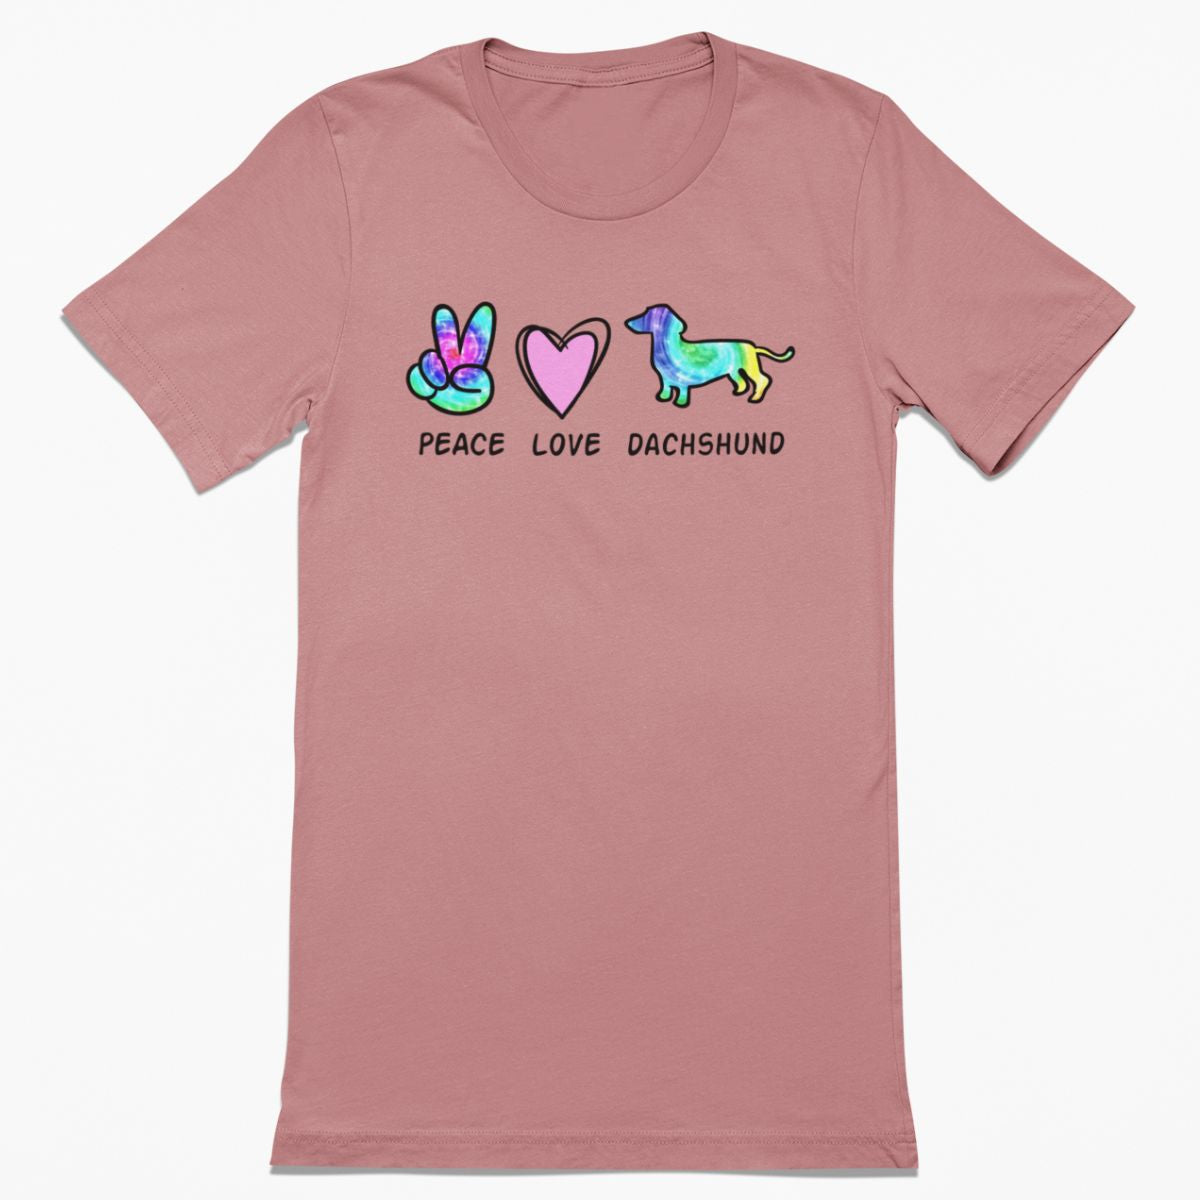 Peace Love Dachshund Pastel Tie Dye Shirt